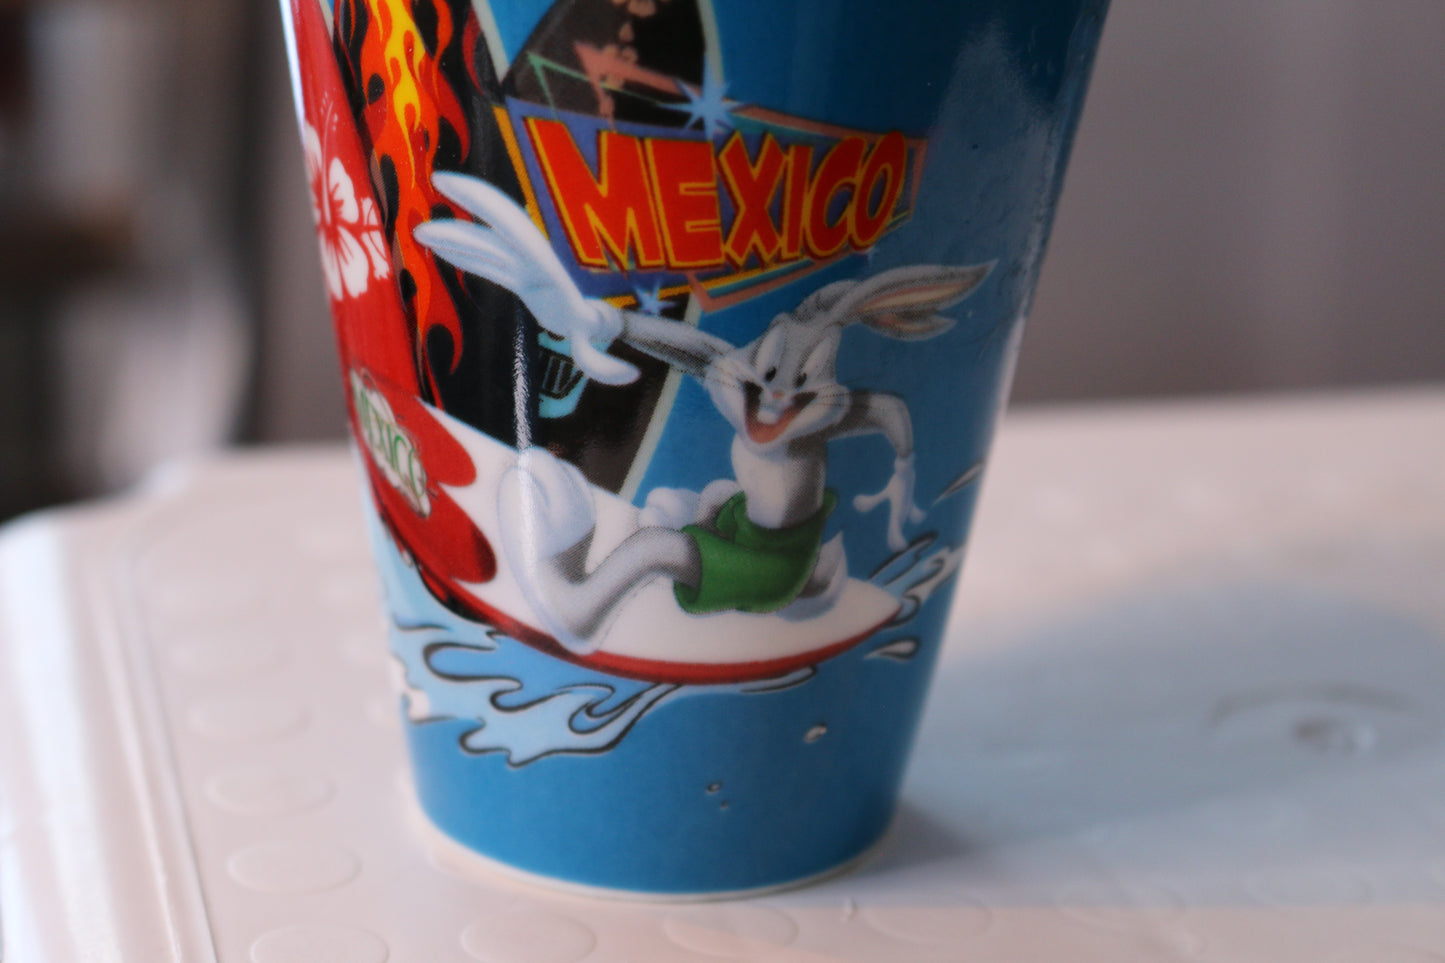 ceramic mug looney tunes mexico Surf travel folgado 2011 (s11) Bugs Bunny